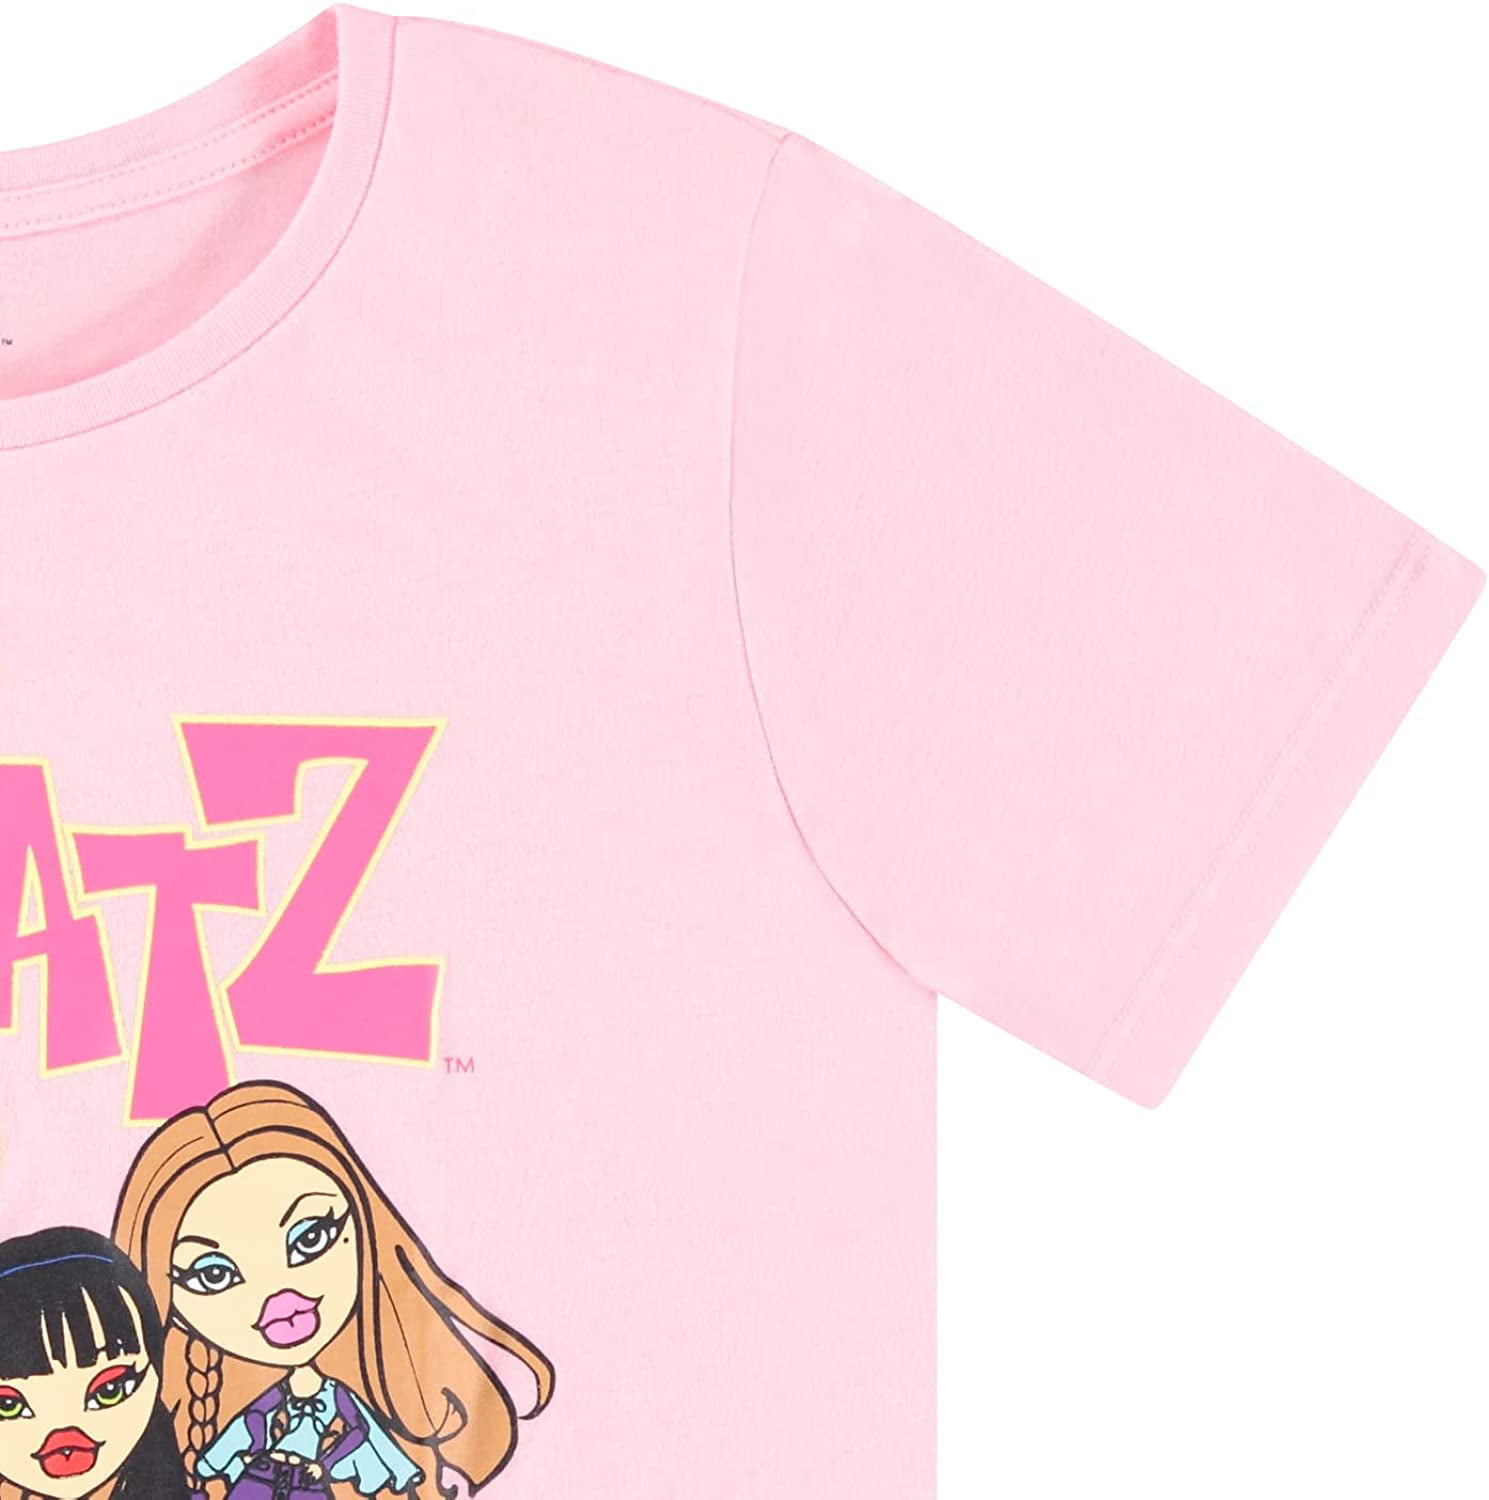 Bratz Ladies Original Dolls Shirt - Yasmin, Cloe, Jade, and Sasha 1990's  Vintage Throwback Graphic T-Shirt